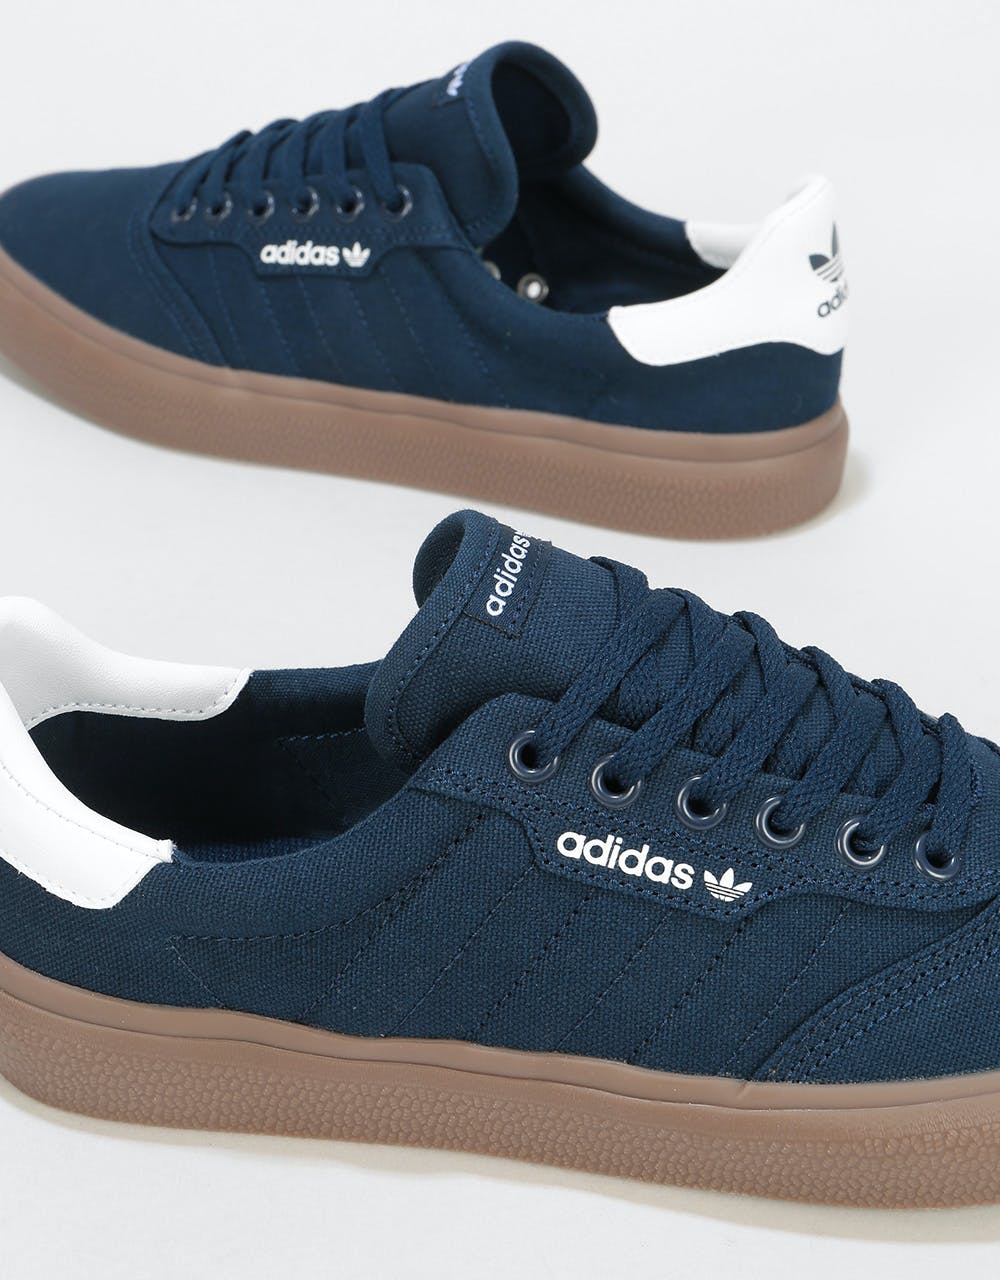 Adidas 3MC Skate Shoes - Collegiate Navy/White/Gum